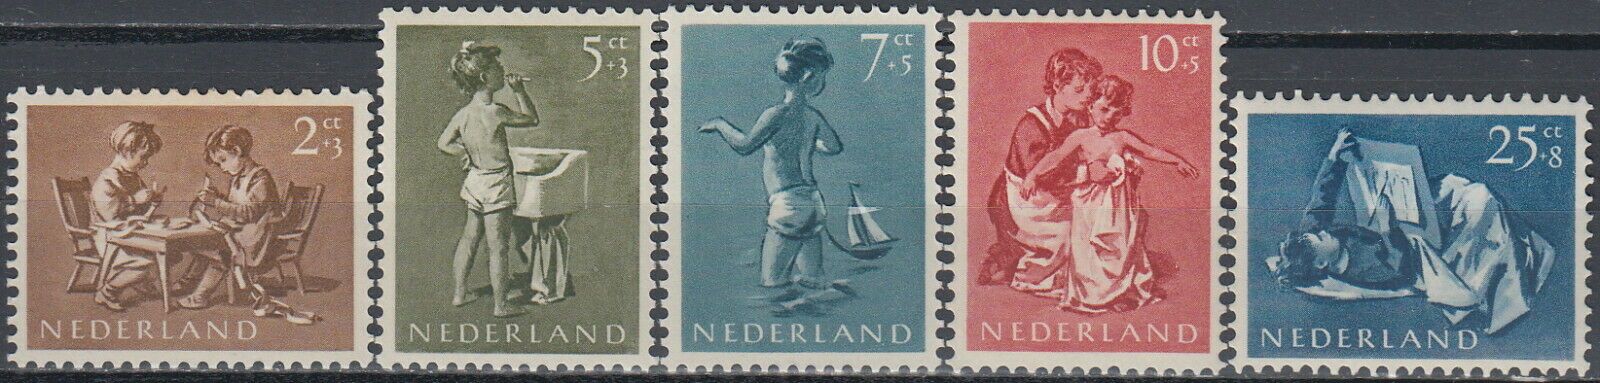 Netherlands Child Welfare 1954 Mnh-20 Euro